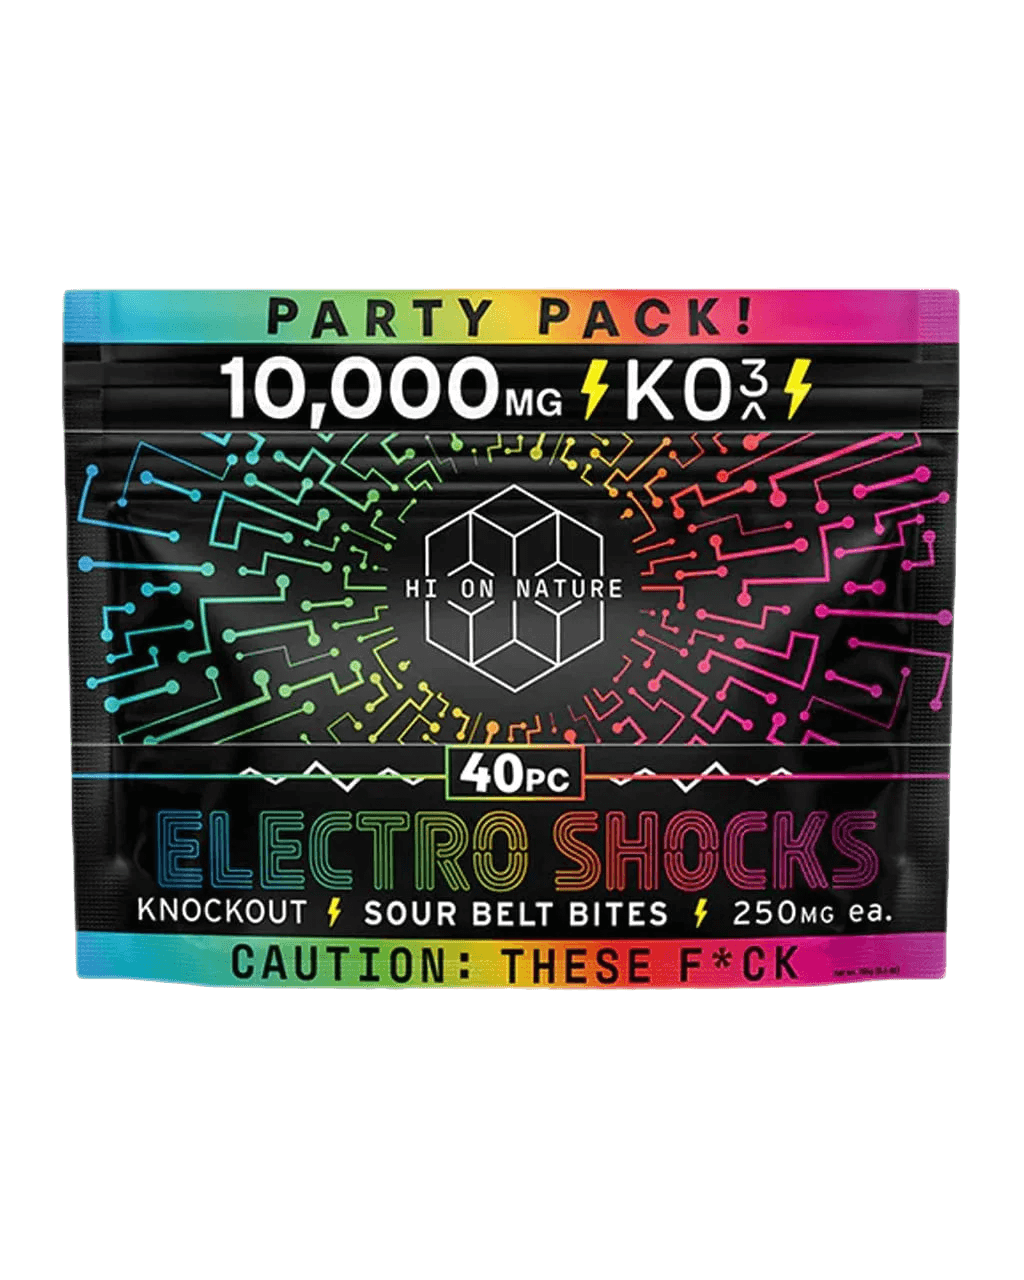 Hi on Nature - Edible Electro Shocks K03 10,000MG Party Pack - Coastal Hemp Co